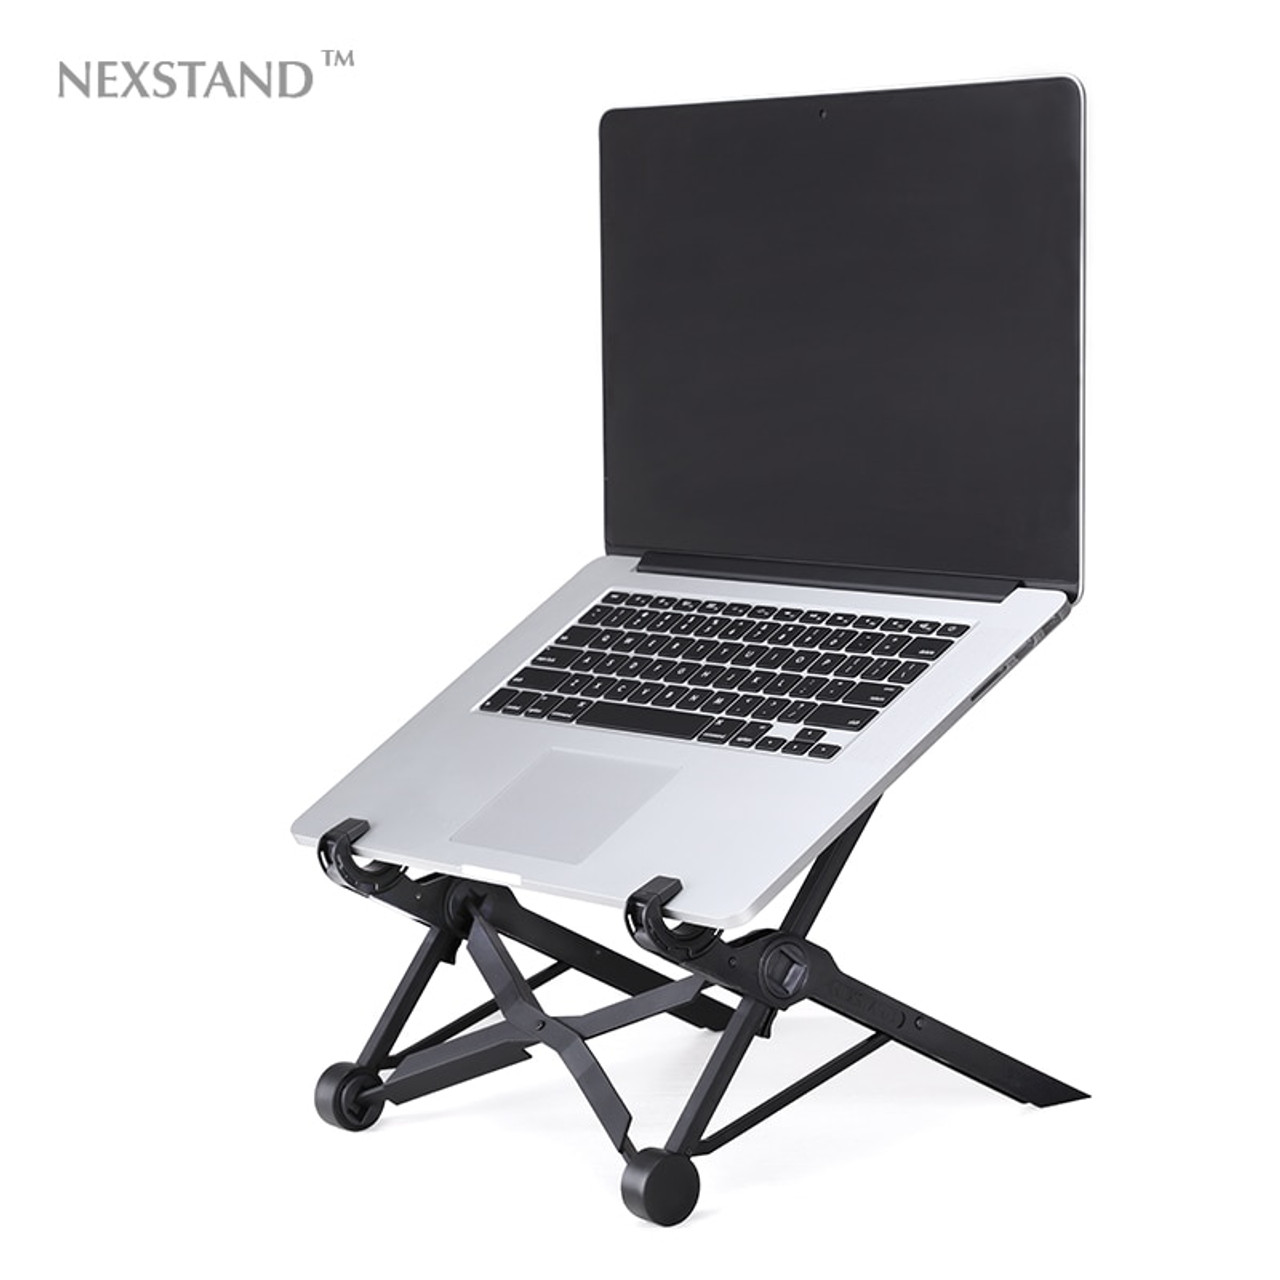 Nexstand K2 Laptop Stand Folding Portable Adjustable Laptop